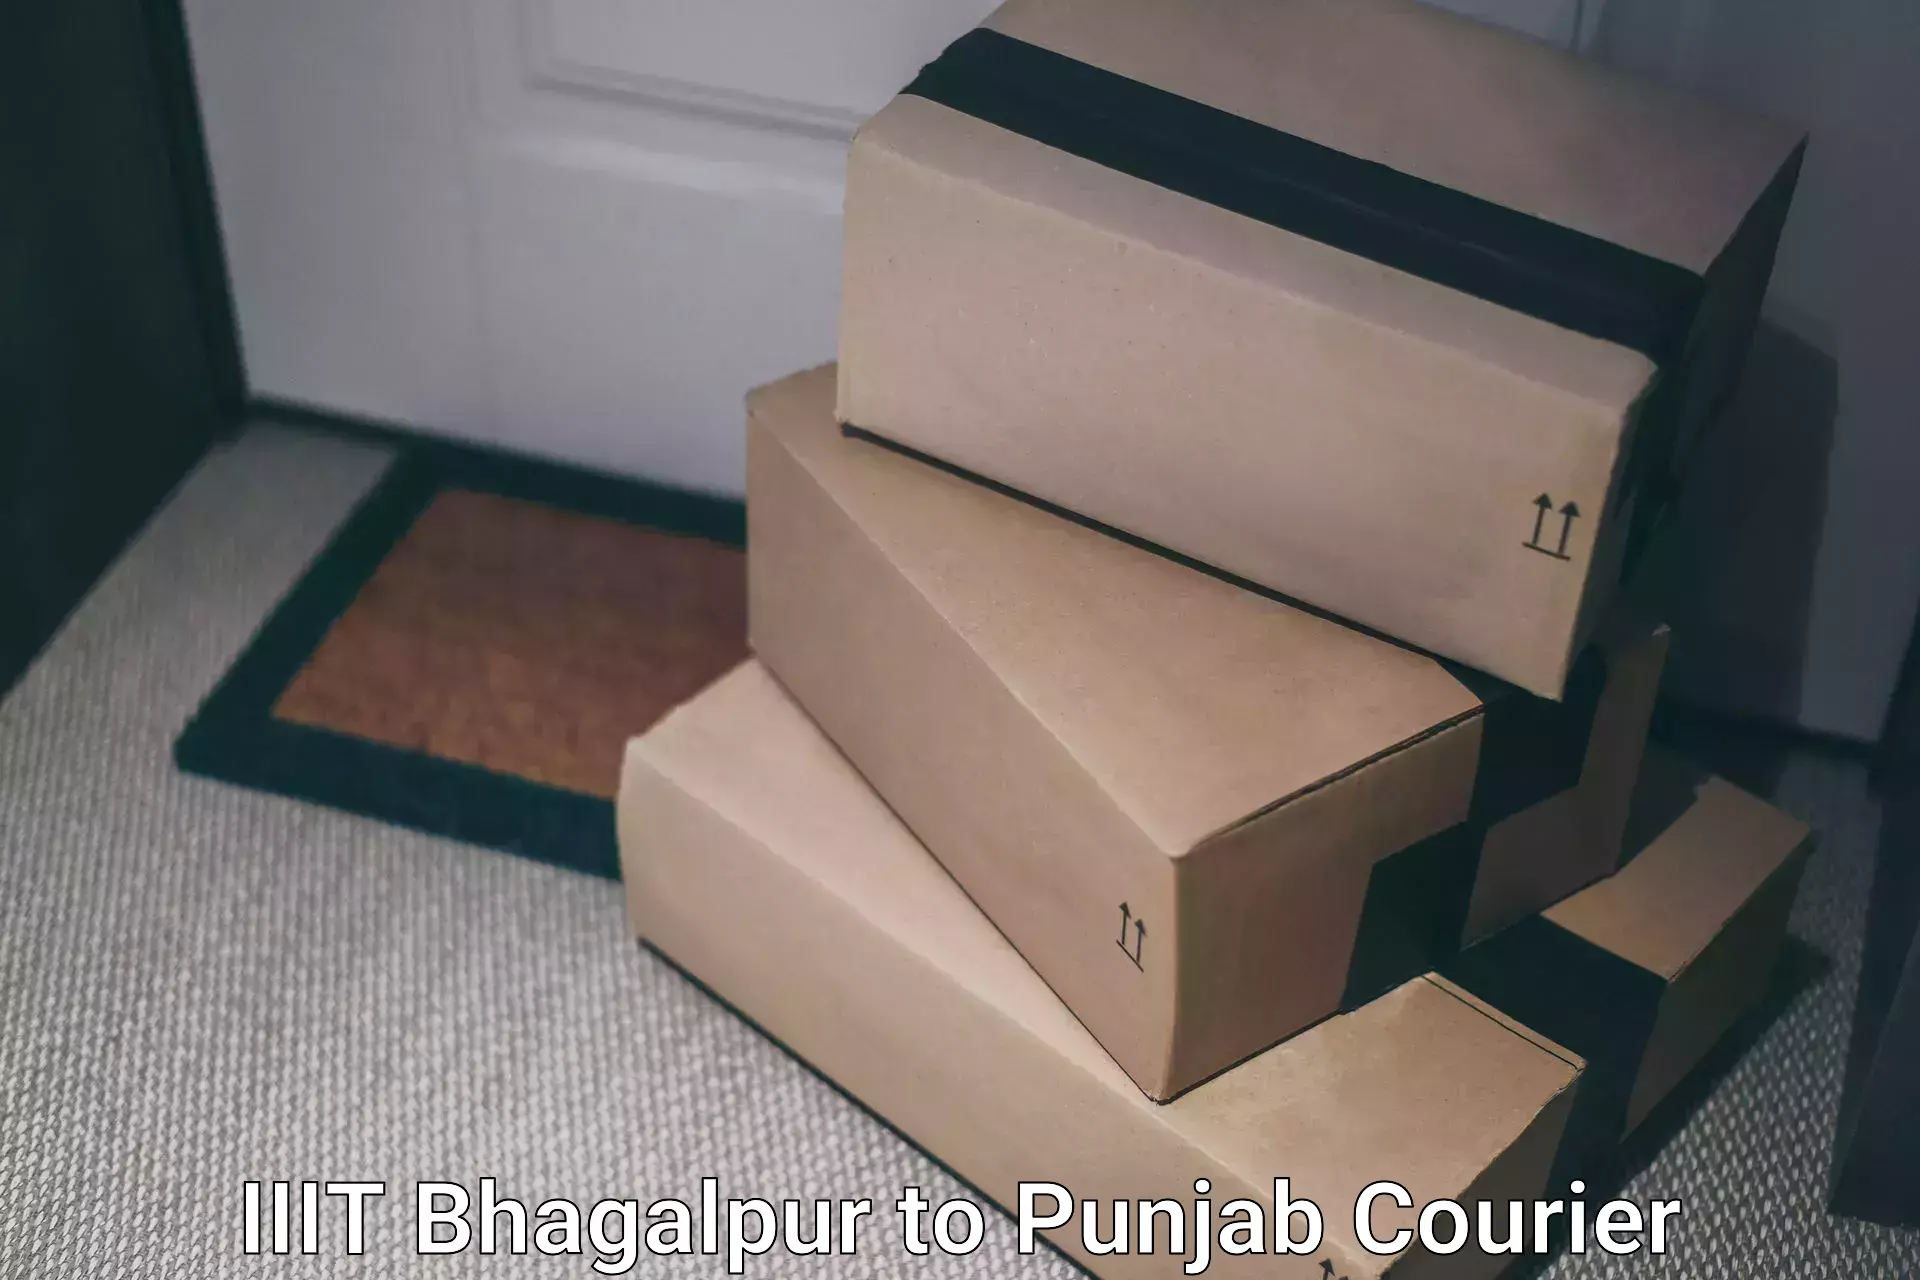 Express delivery capabilities IIIT Bhagalpur to Abohar